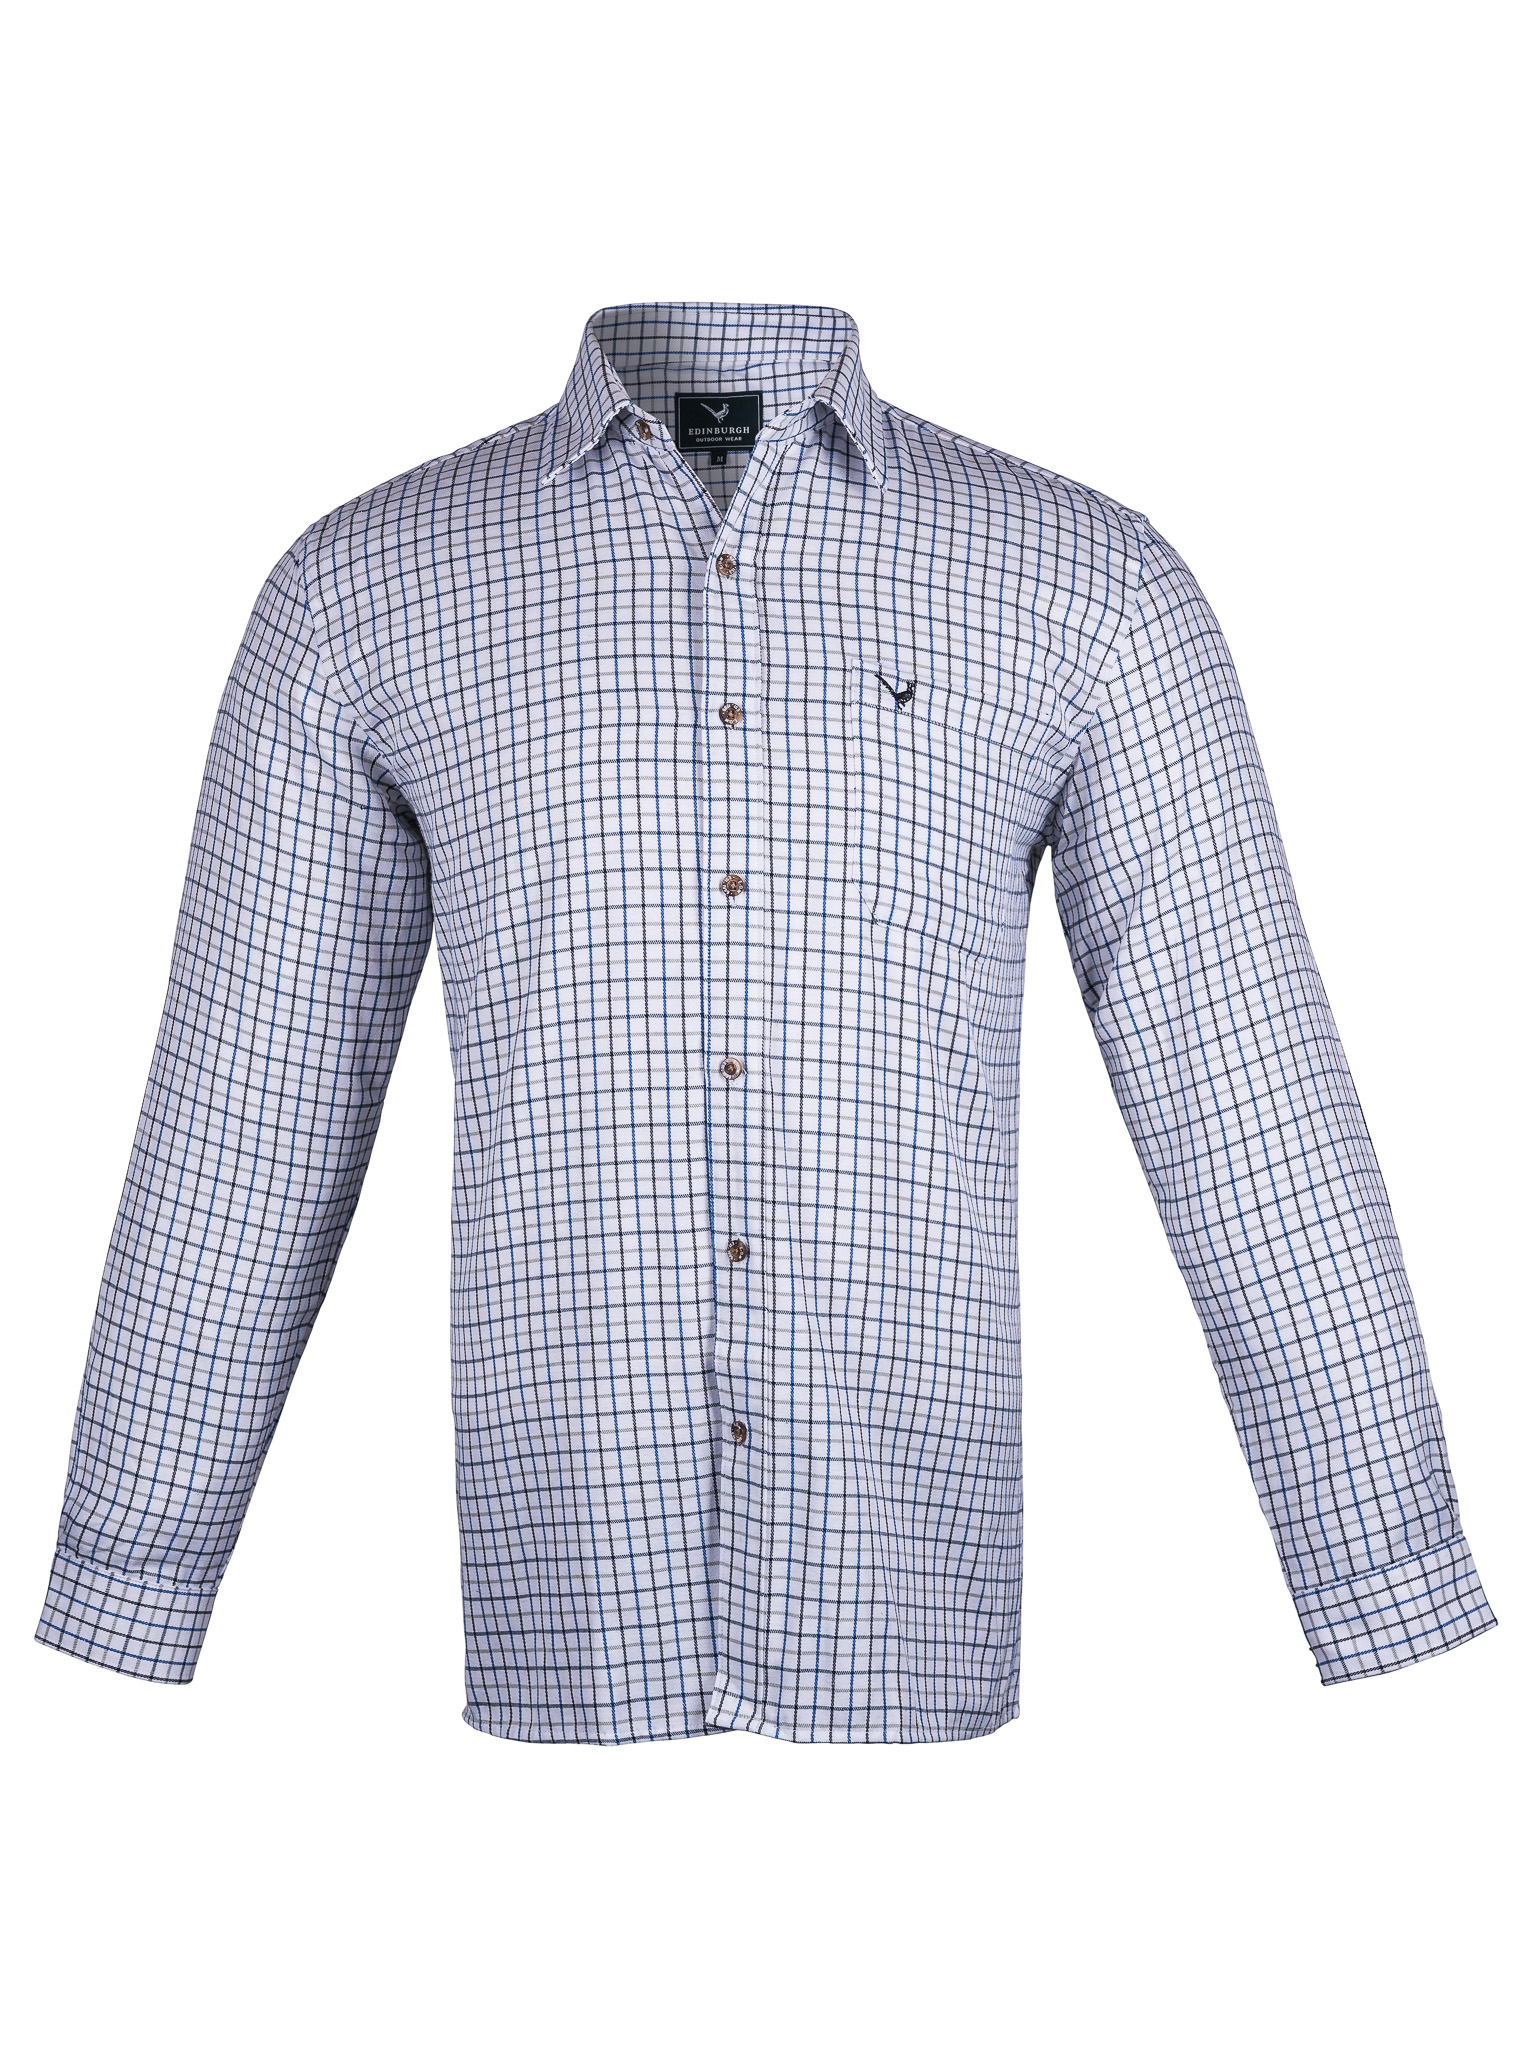 Edinburgh Outdoor Wear Men's Glenn Shirt - Blue - Edinburgh Outdoor Wear